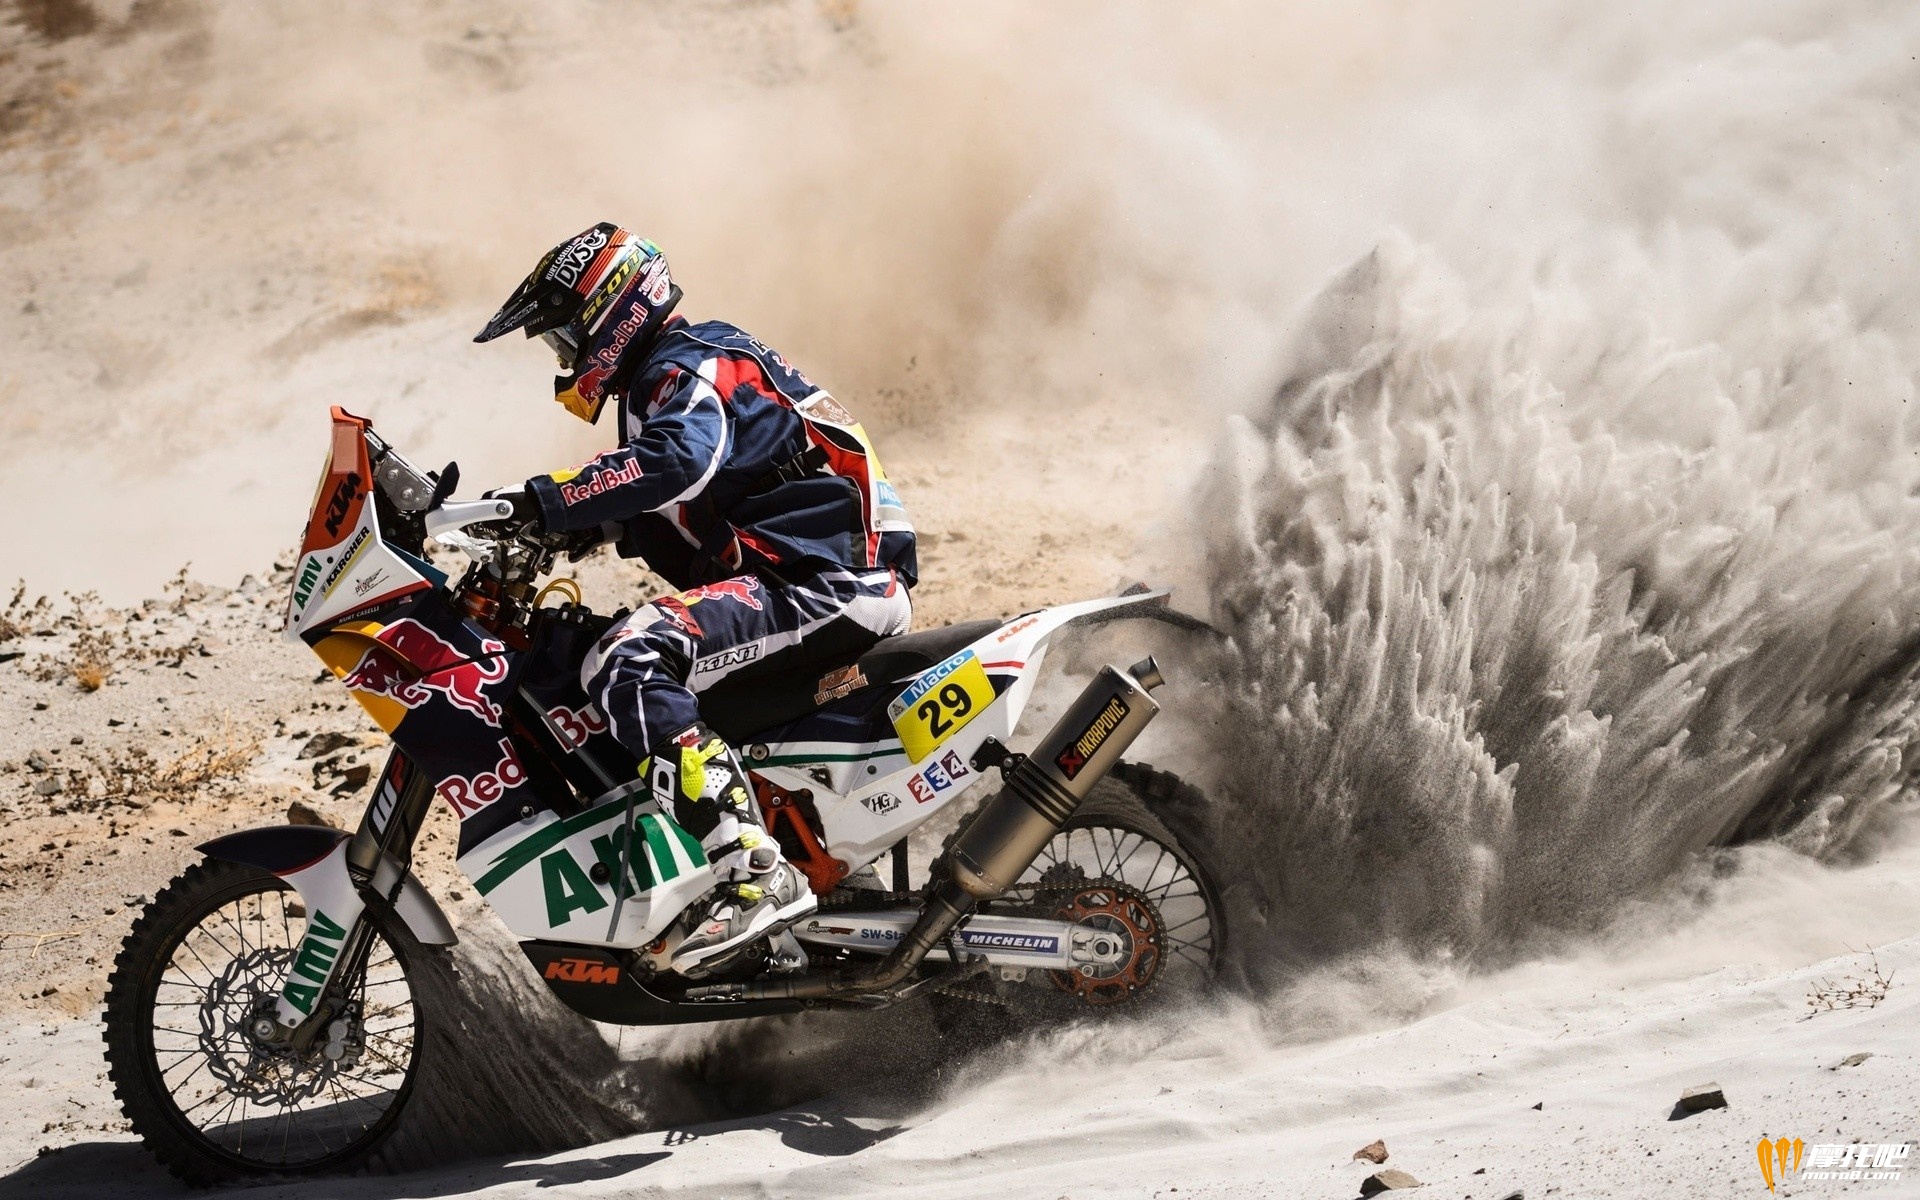 dakar-dust-ktm-motorbikes-rally-2772467-1920x1200.jpg